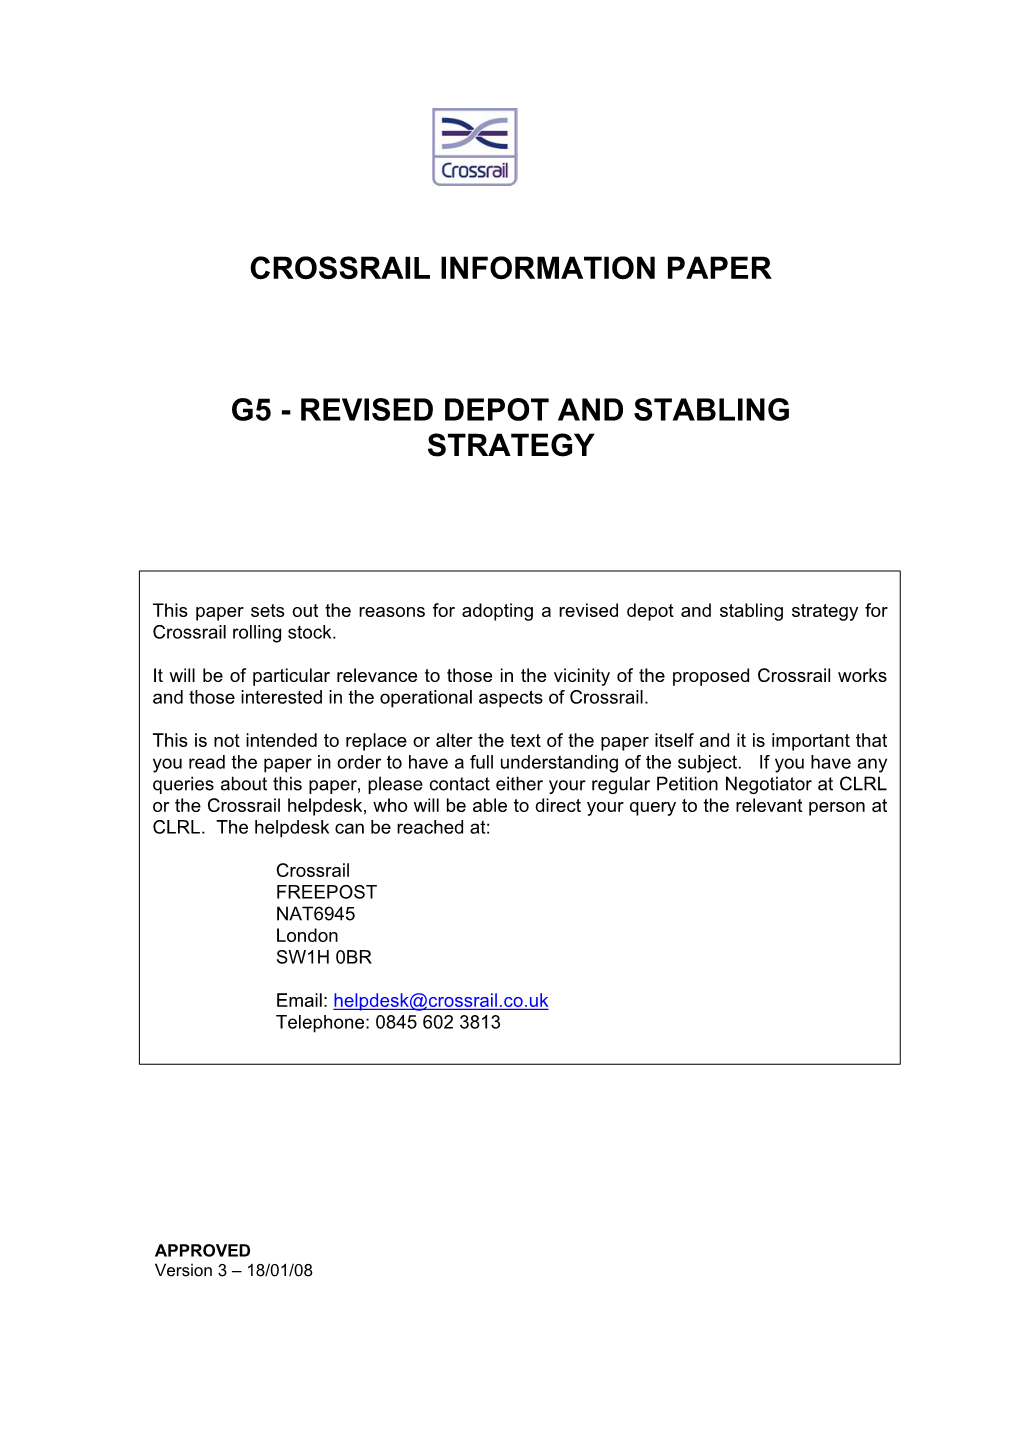 Crossrail Information Paper G5